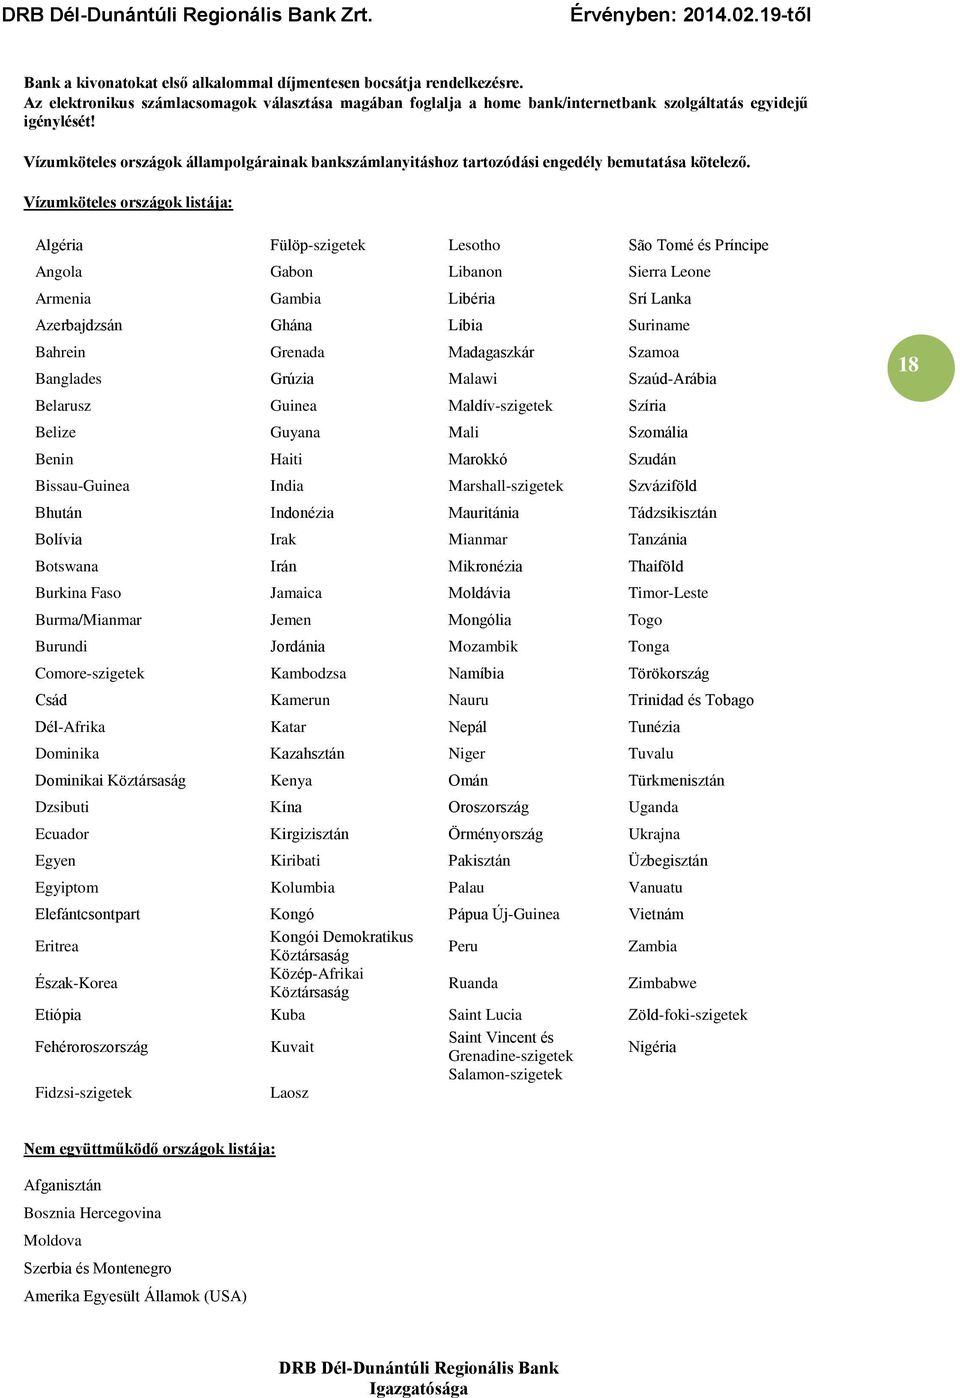 Vízumköteles országok listája: Algéria Fülöp-szigetek Lesotho São Tomé és Príncipe Angola Gabon Libanon Sierra Leone Armenia Gambia Libéria Srí Lanka Azerbajdzsán Ghána Líbia Suriname Bahrein Grenada